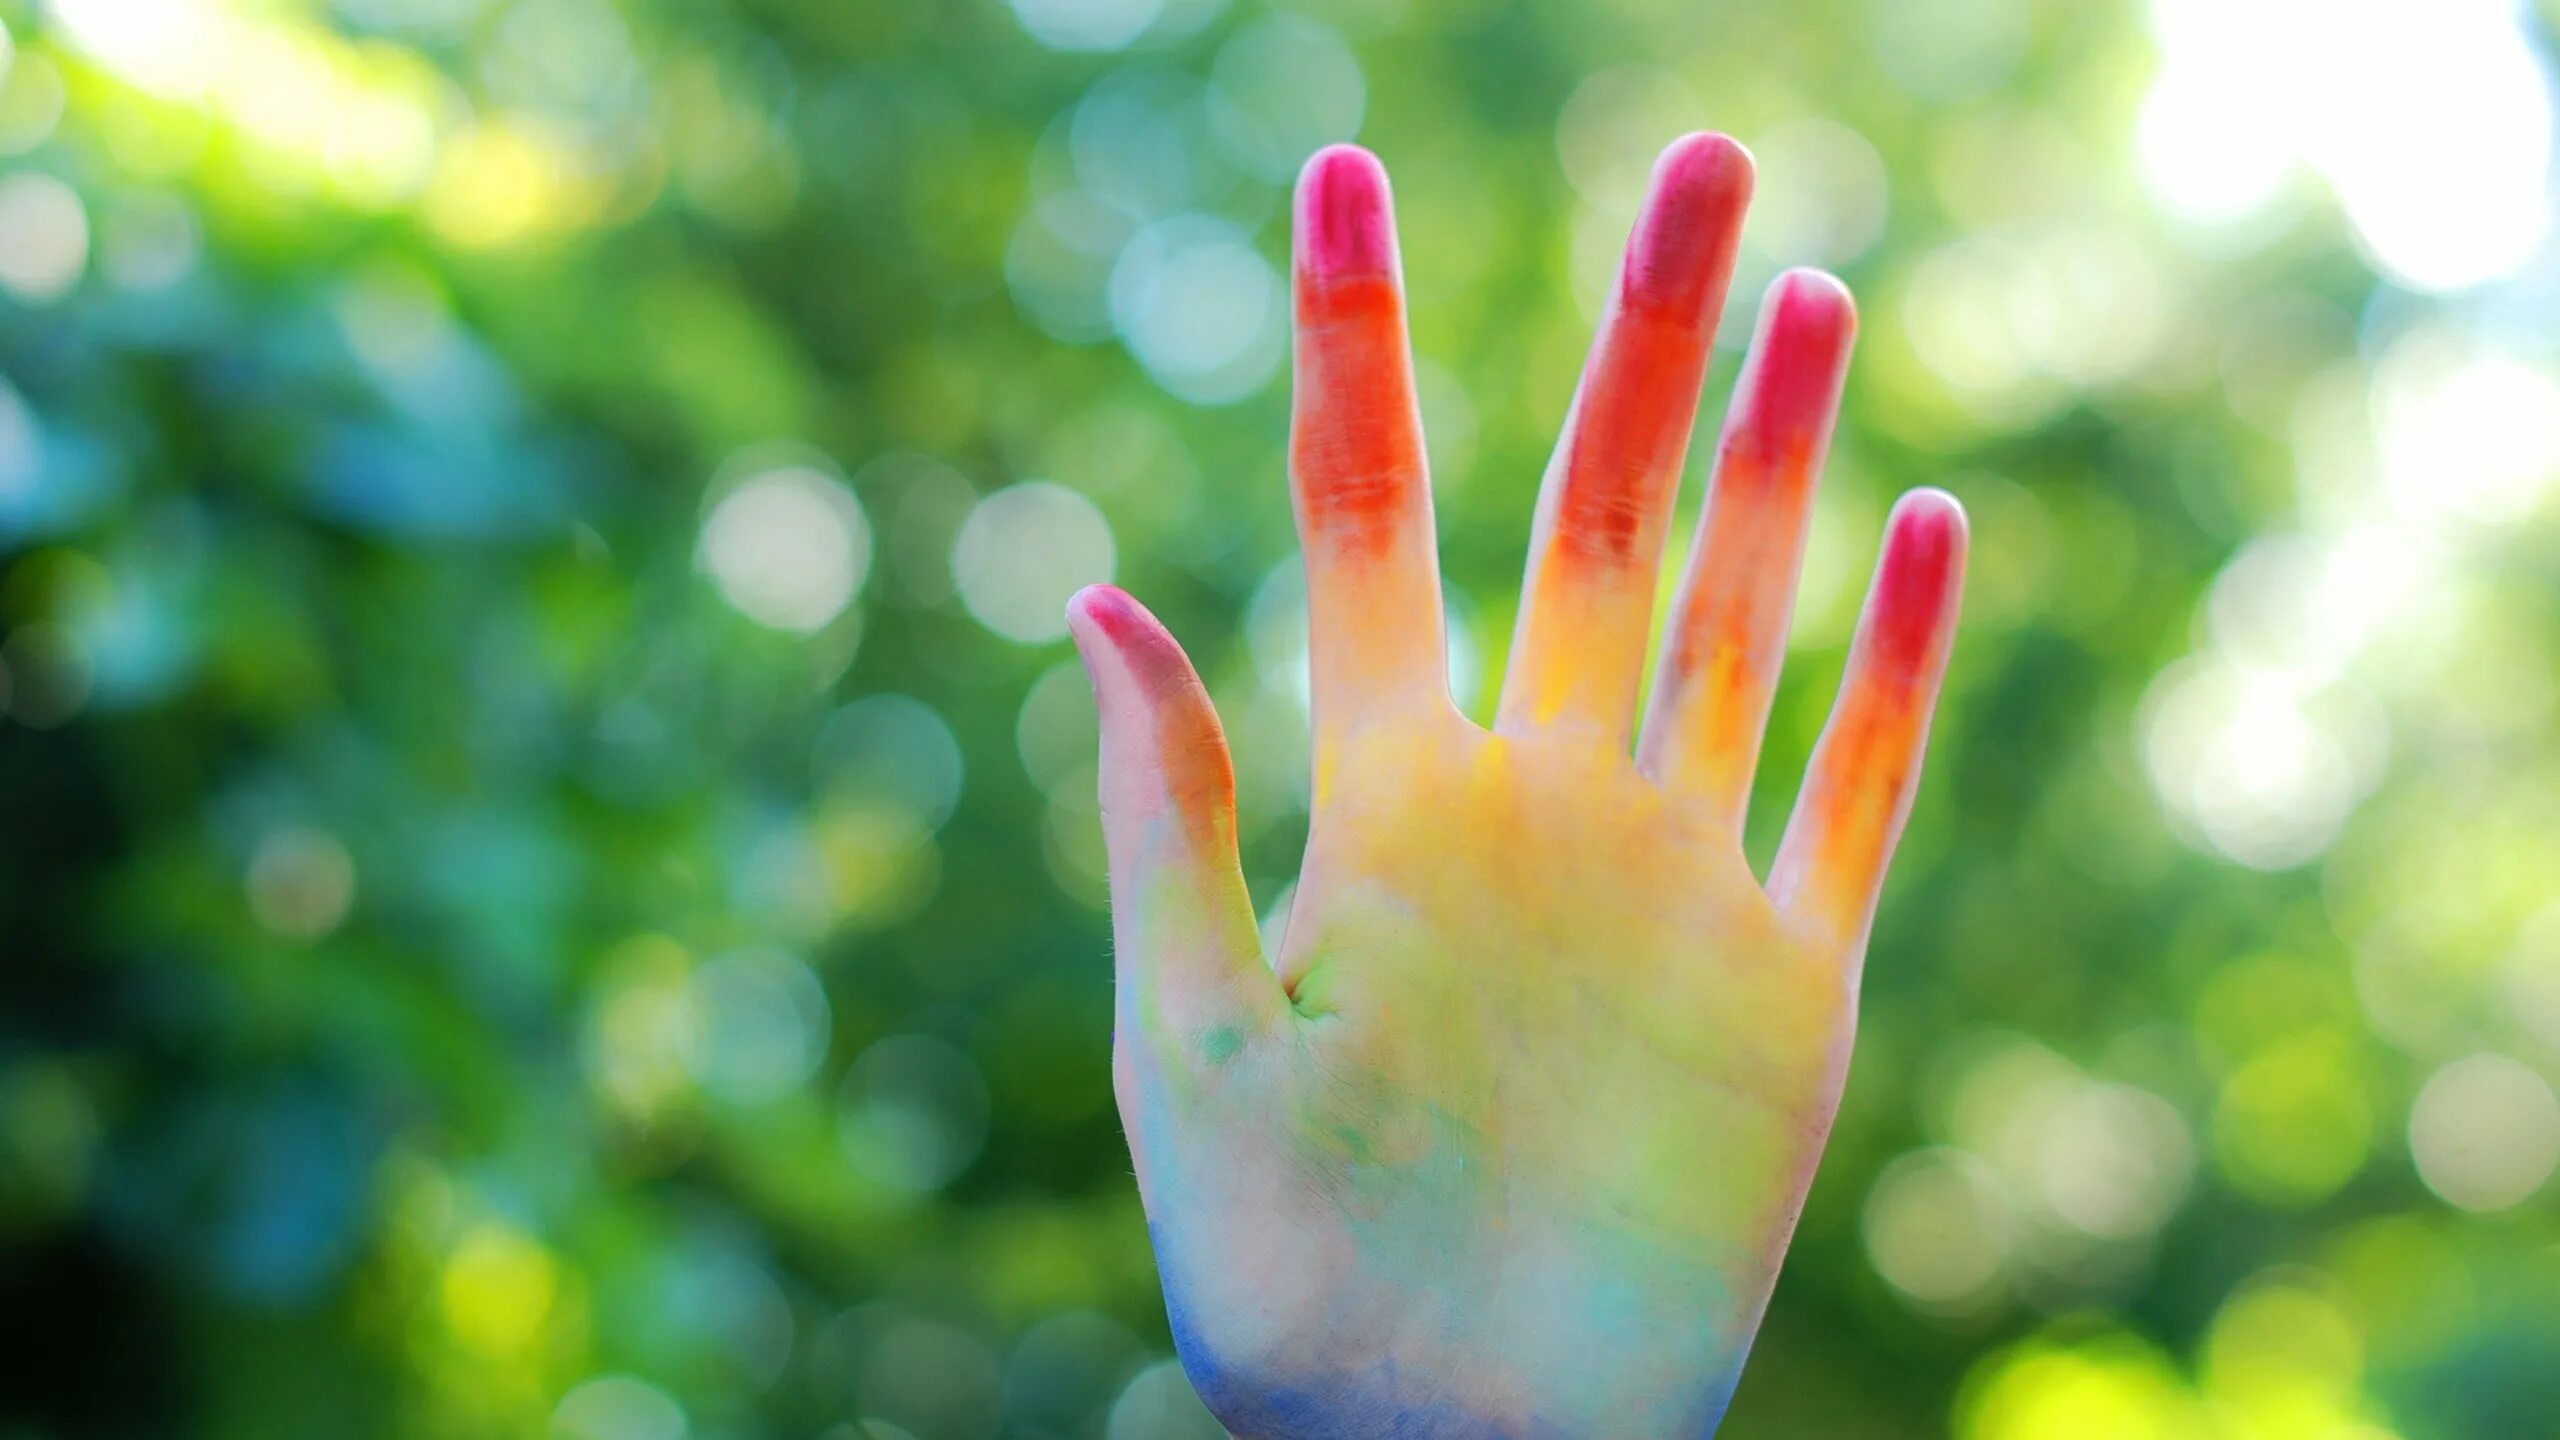 All hands the colours high. Цветные руки. Разноцветные ладошки. Разноцветные ладони. Красивые ладошки.